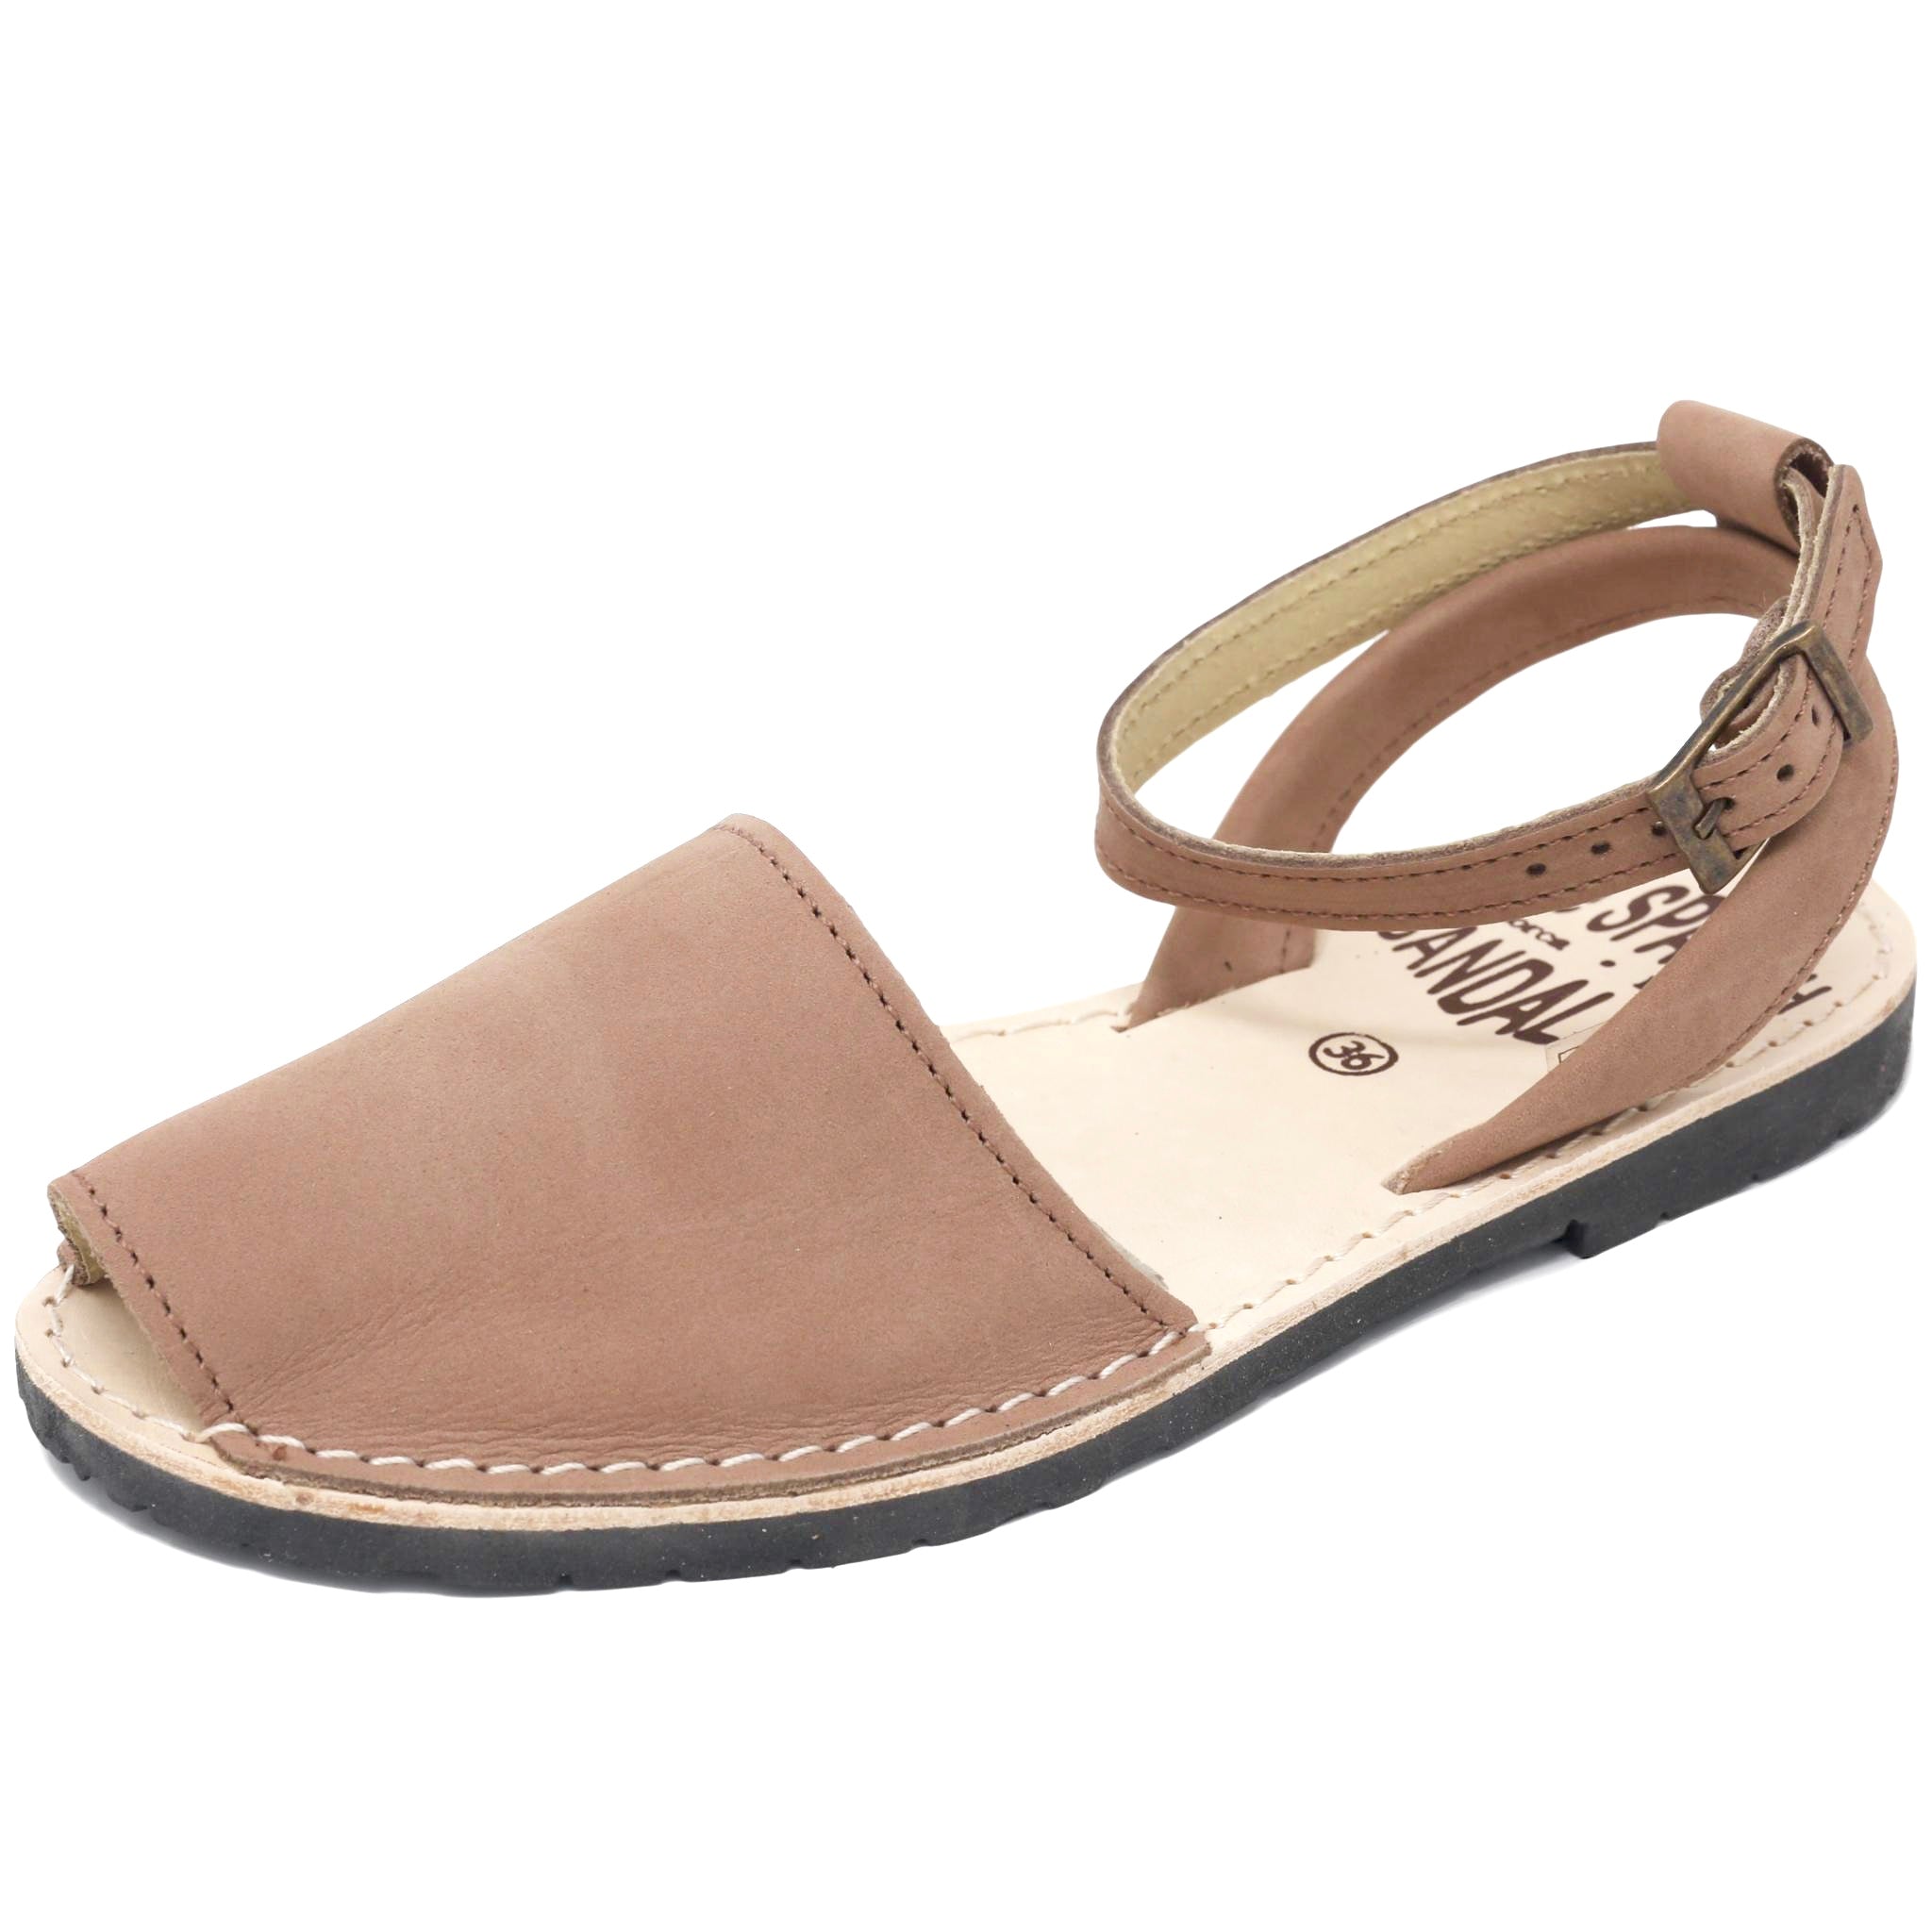 Tan nubuck espadrille wedges - The Spanish Sandal Company